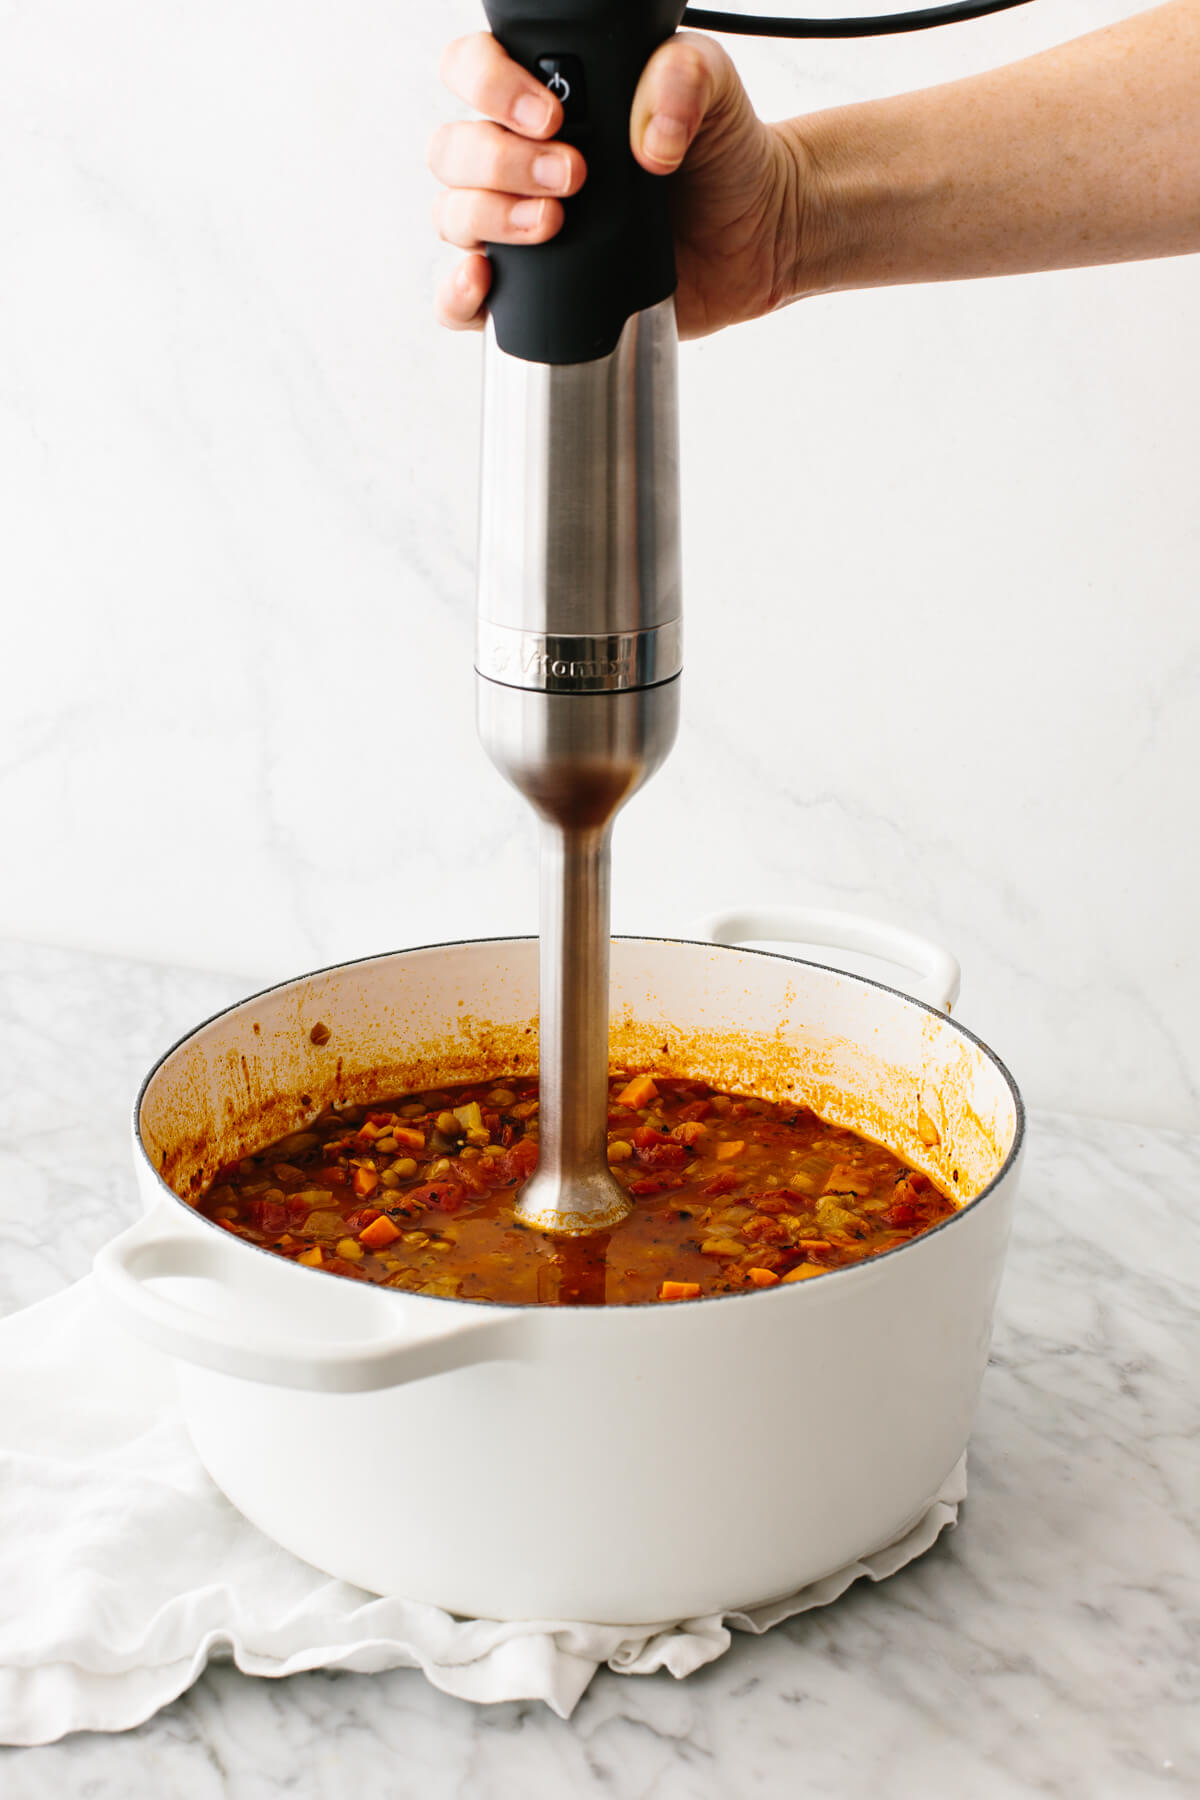 Using an immersion blender to spot blend a lentil soup in a pot.